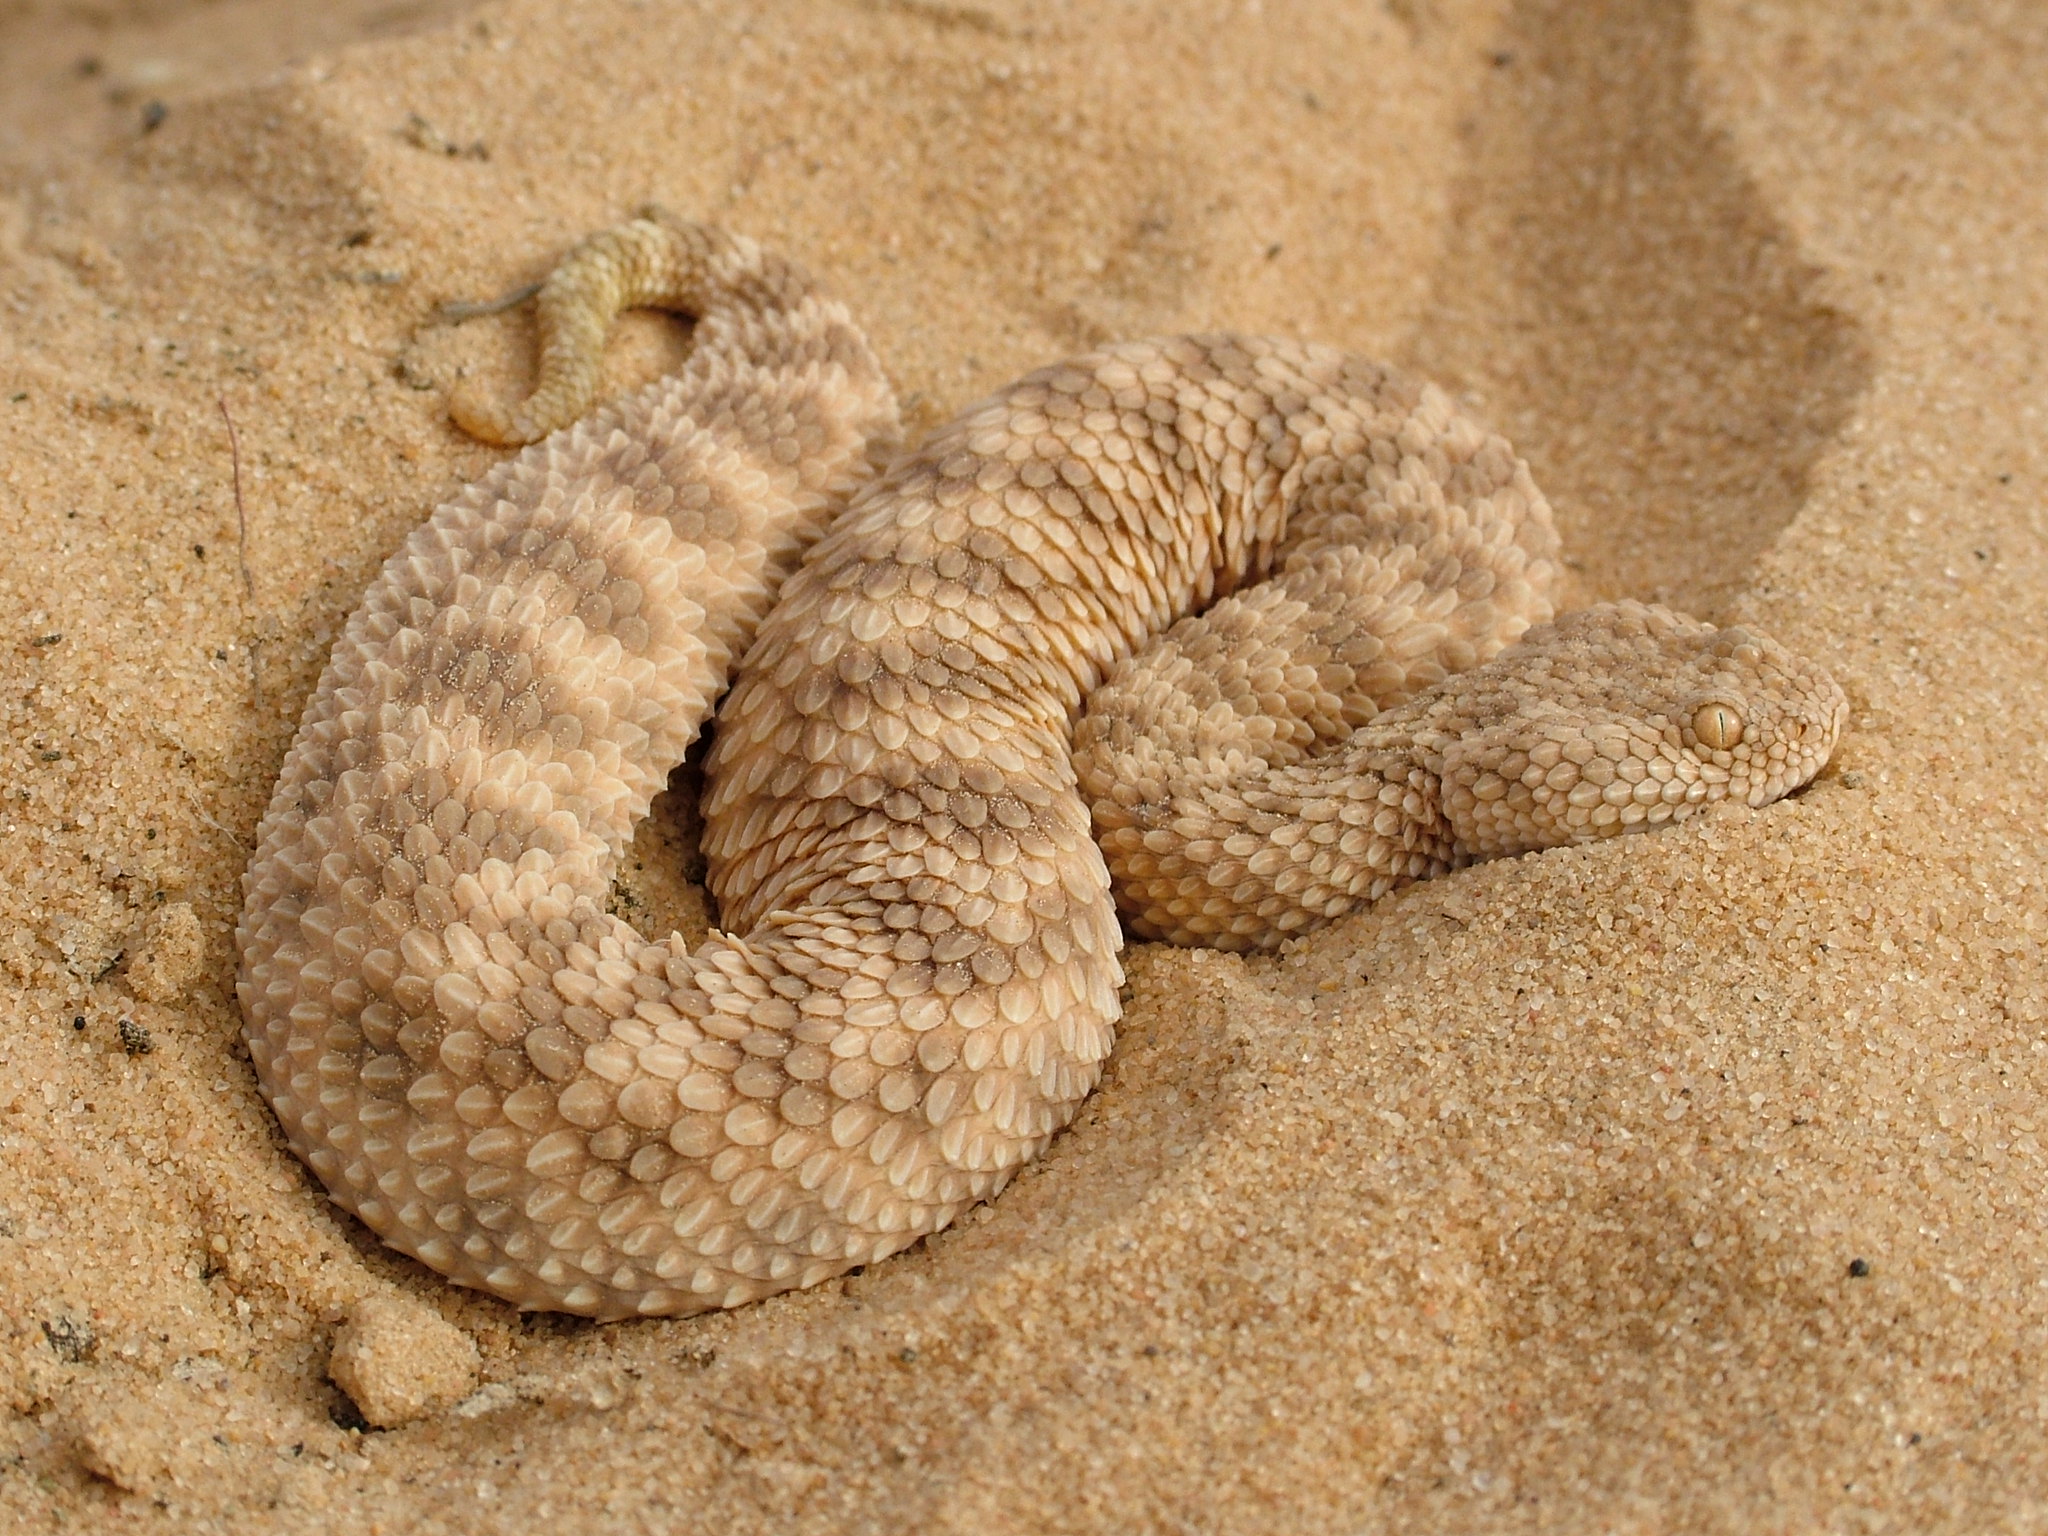 Песчаная сестрица гадюки. Змея Песчаная гадюка. Песчаная Эфа змея. Сахарская Песчаная гадюка. Рогатая Песчаная гадюка.